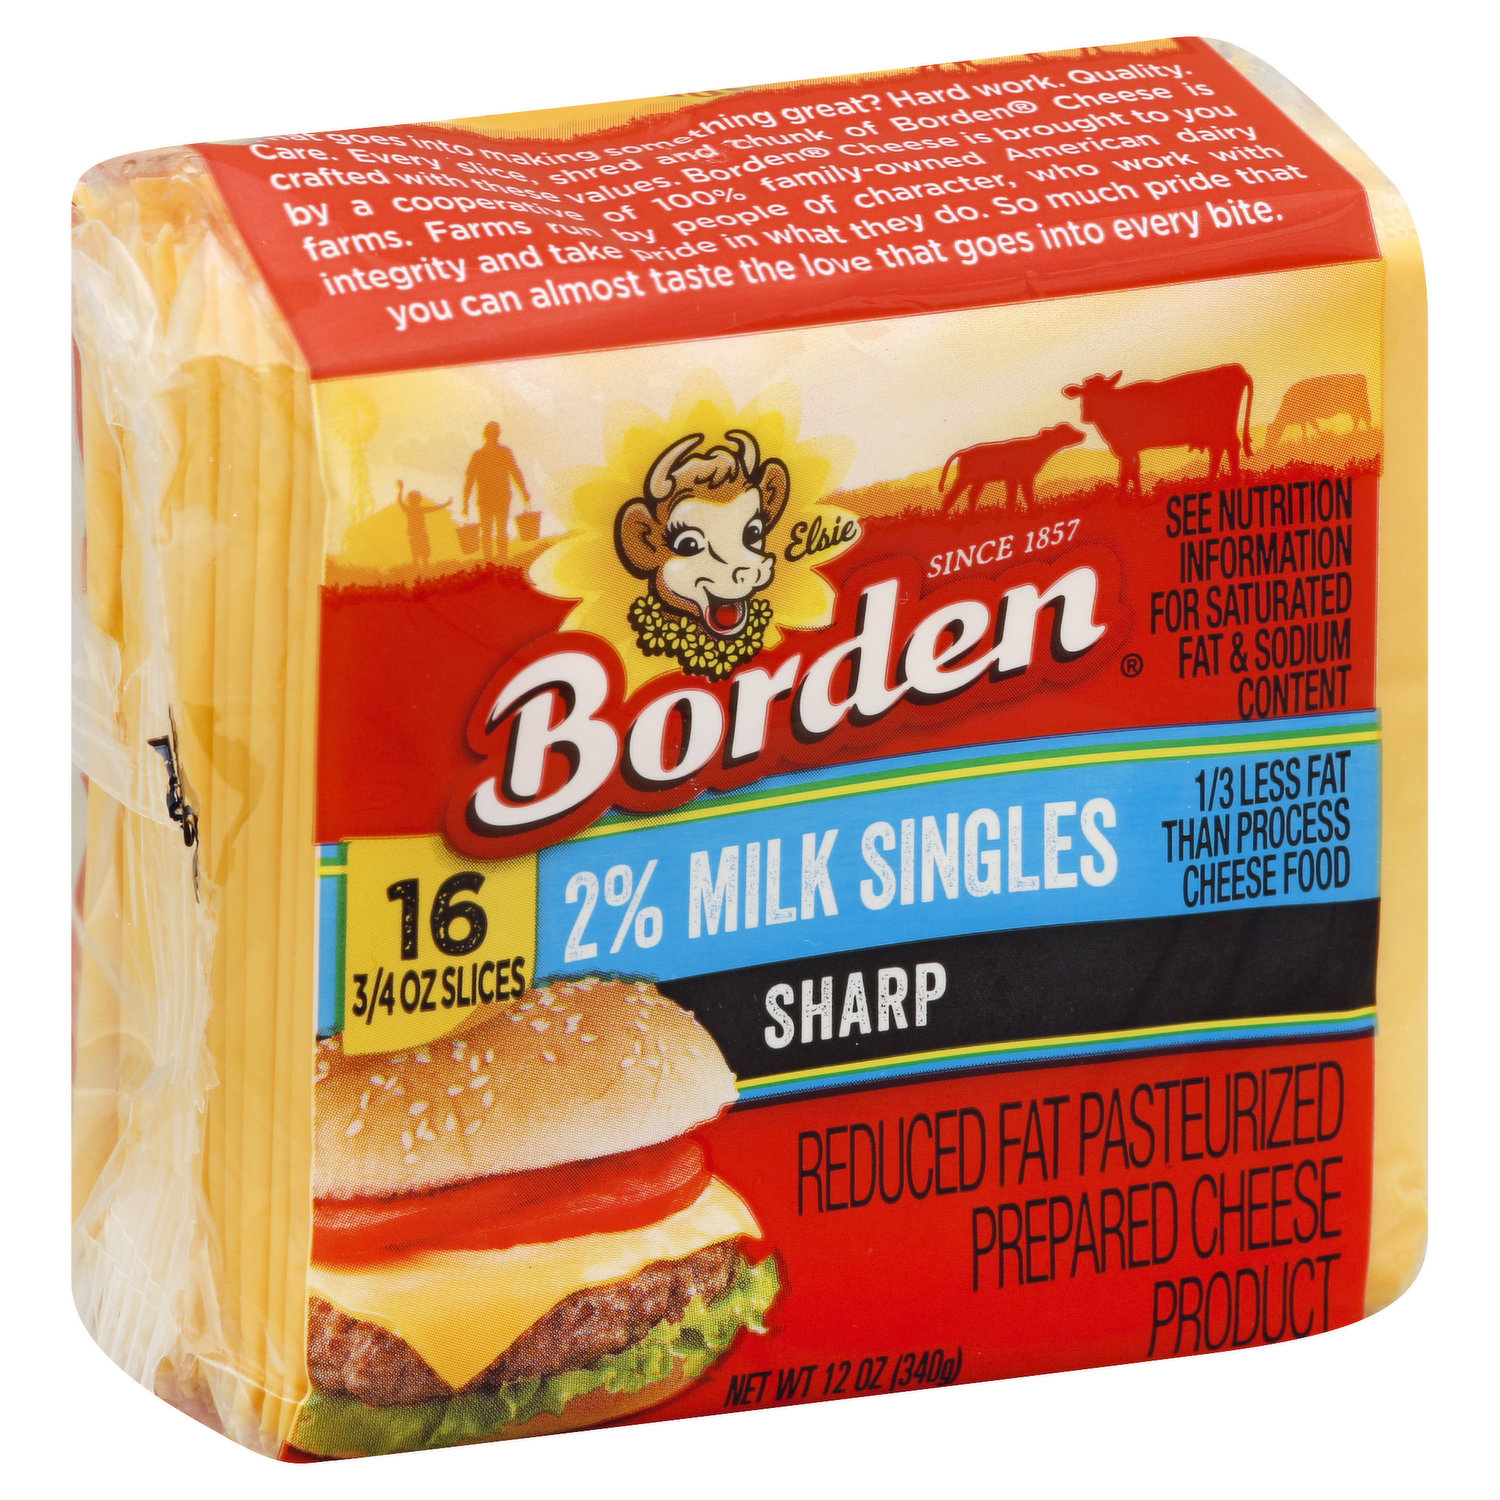 Borden launches nutritionally enhanced milk for kids